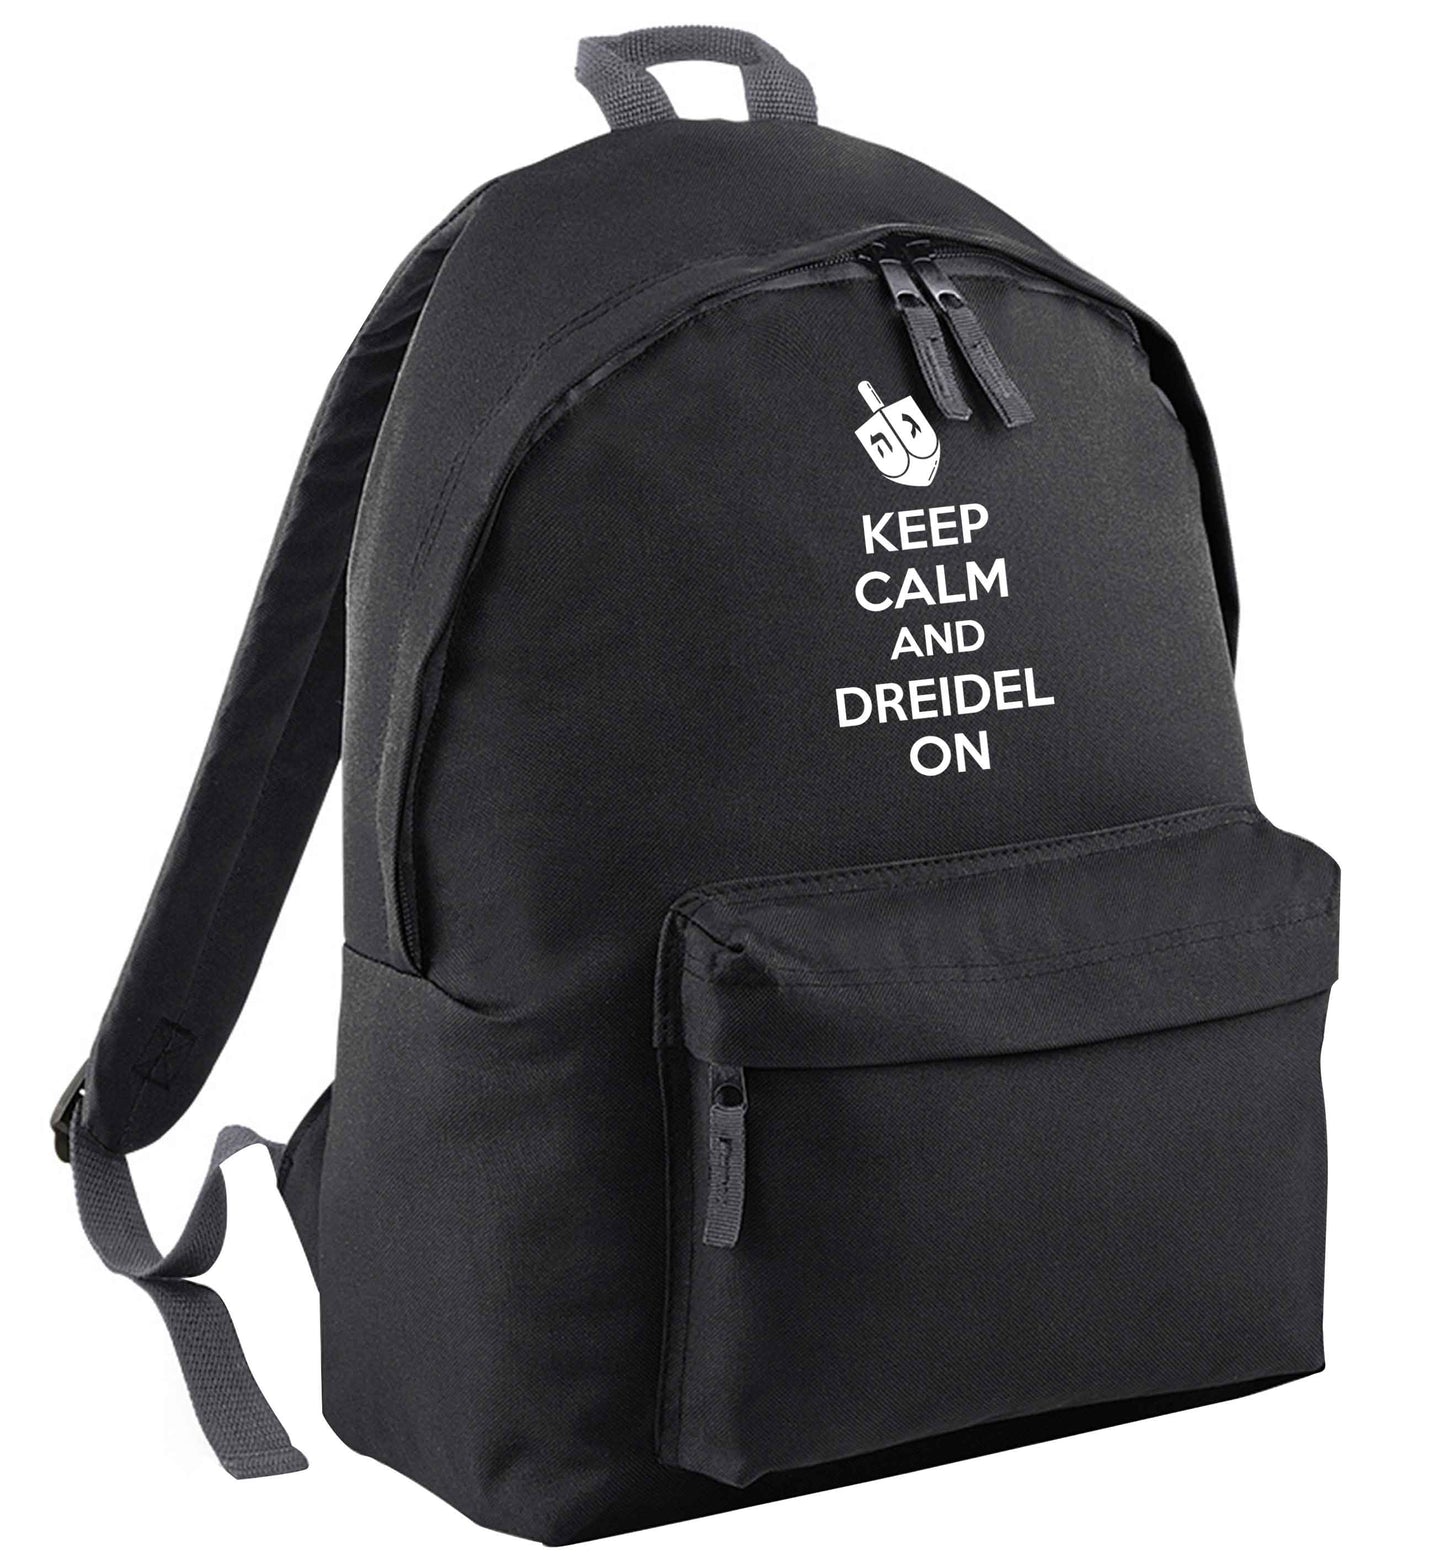 Keep calm and dreidel on black adults backpack